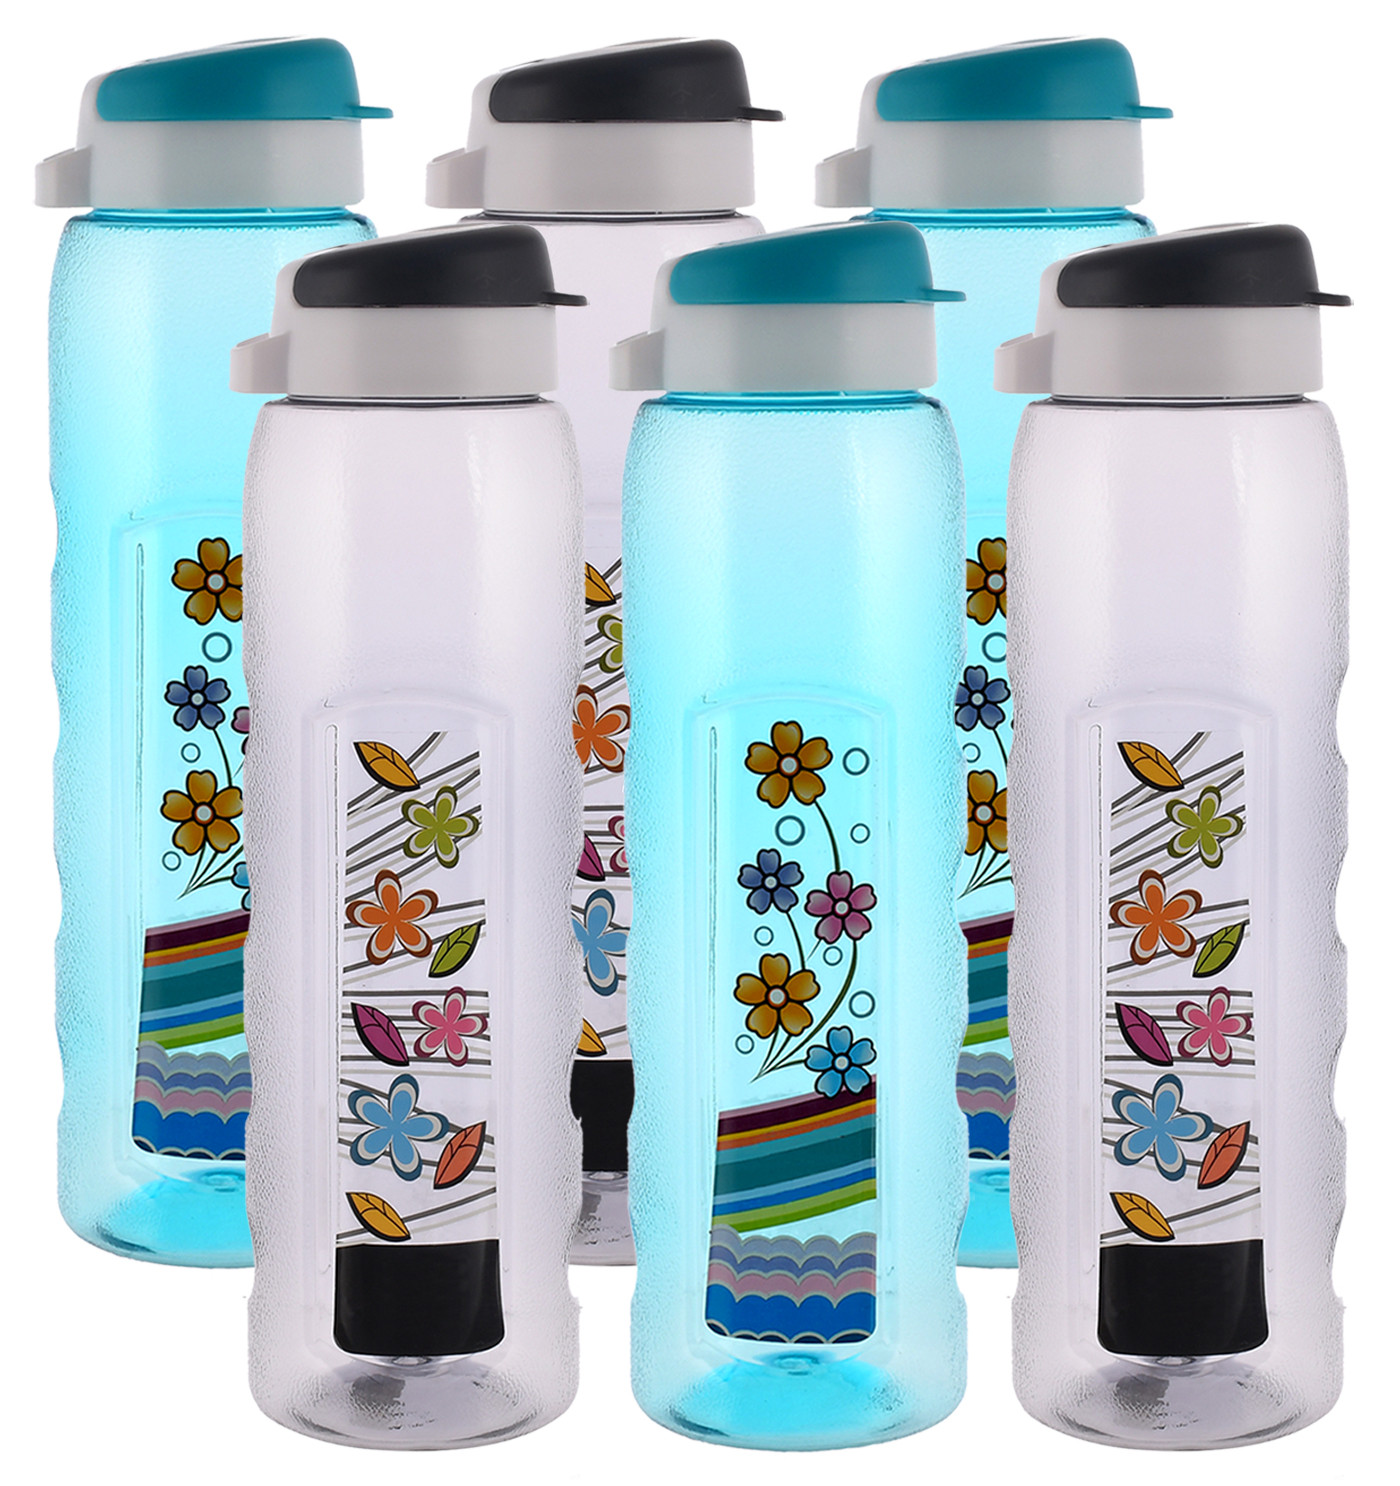 Kuber Industries Unbreakable BPA & Leak Free Plastic Water Bottle With Sipper-1 Litre, Pack of 6 (Sky Blue & Grey)